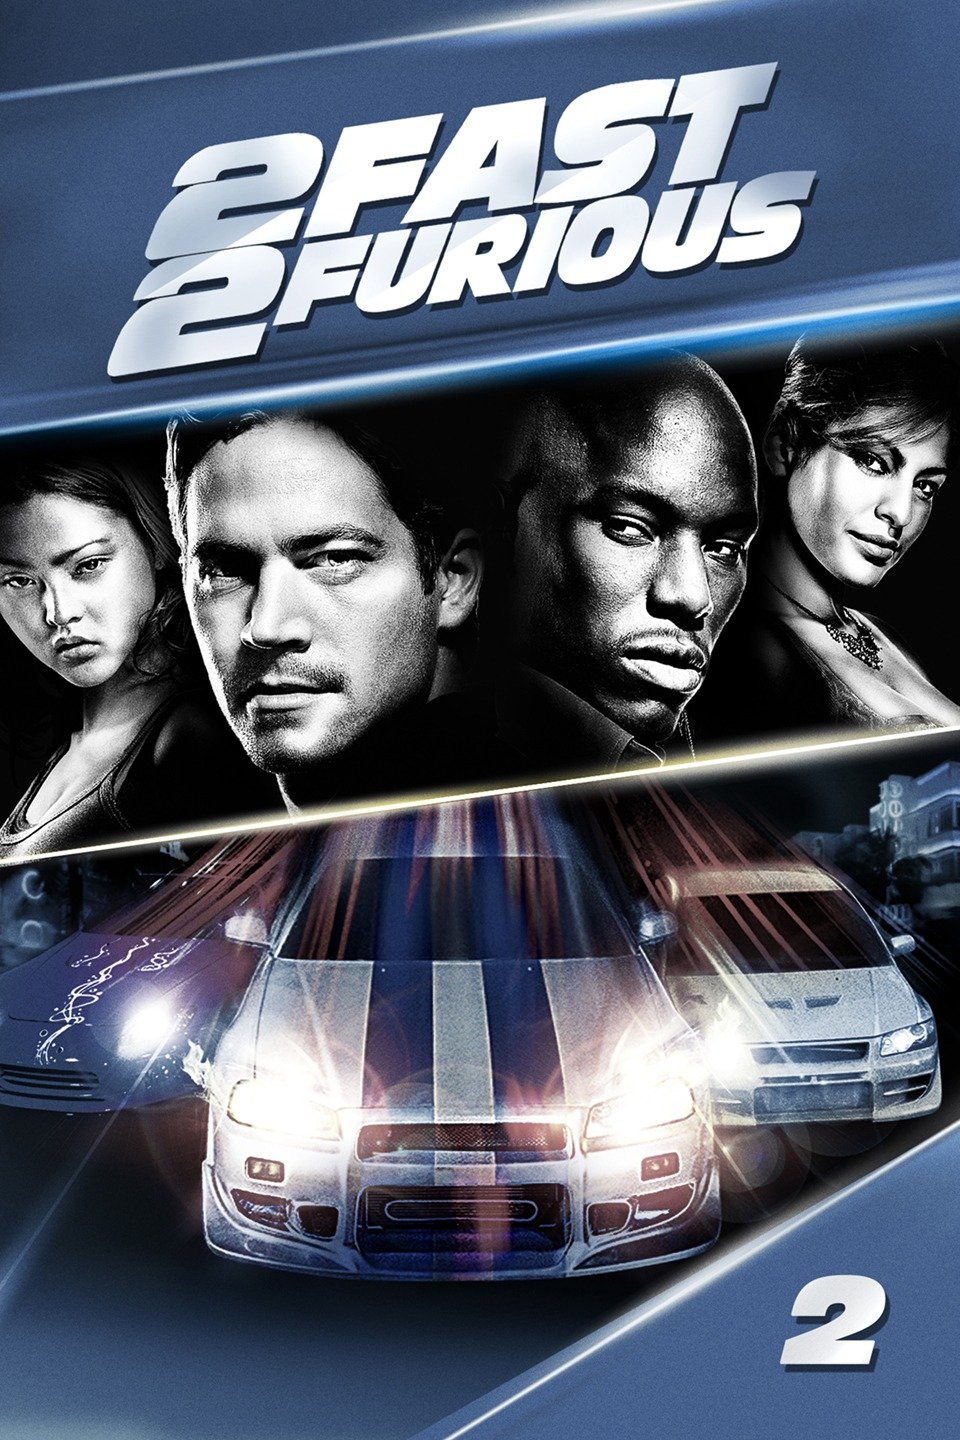 [Mini-HD] 2 Fast 2 Furious (2003) เร็วคูณ 2 ดับเบิ้ลแรงท้านรก ภาค 2 [1080P] [BluRay.DTS.x264] [พากย์ไทย DTS + อังกฤษ DTS] [บรรยายไทย + อังกฤษ] [เสียงไทย + ซับไทย] [ONE2UP]